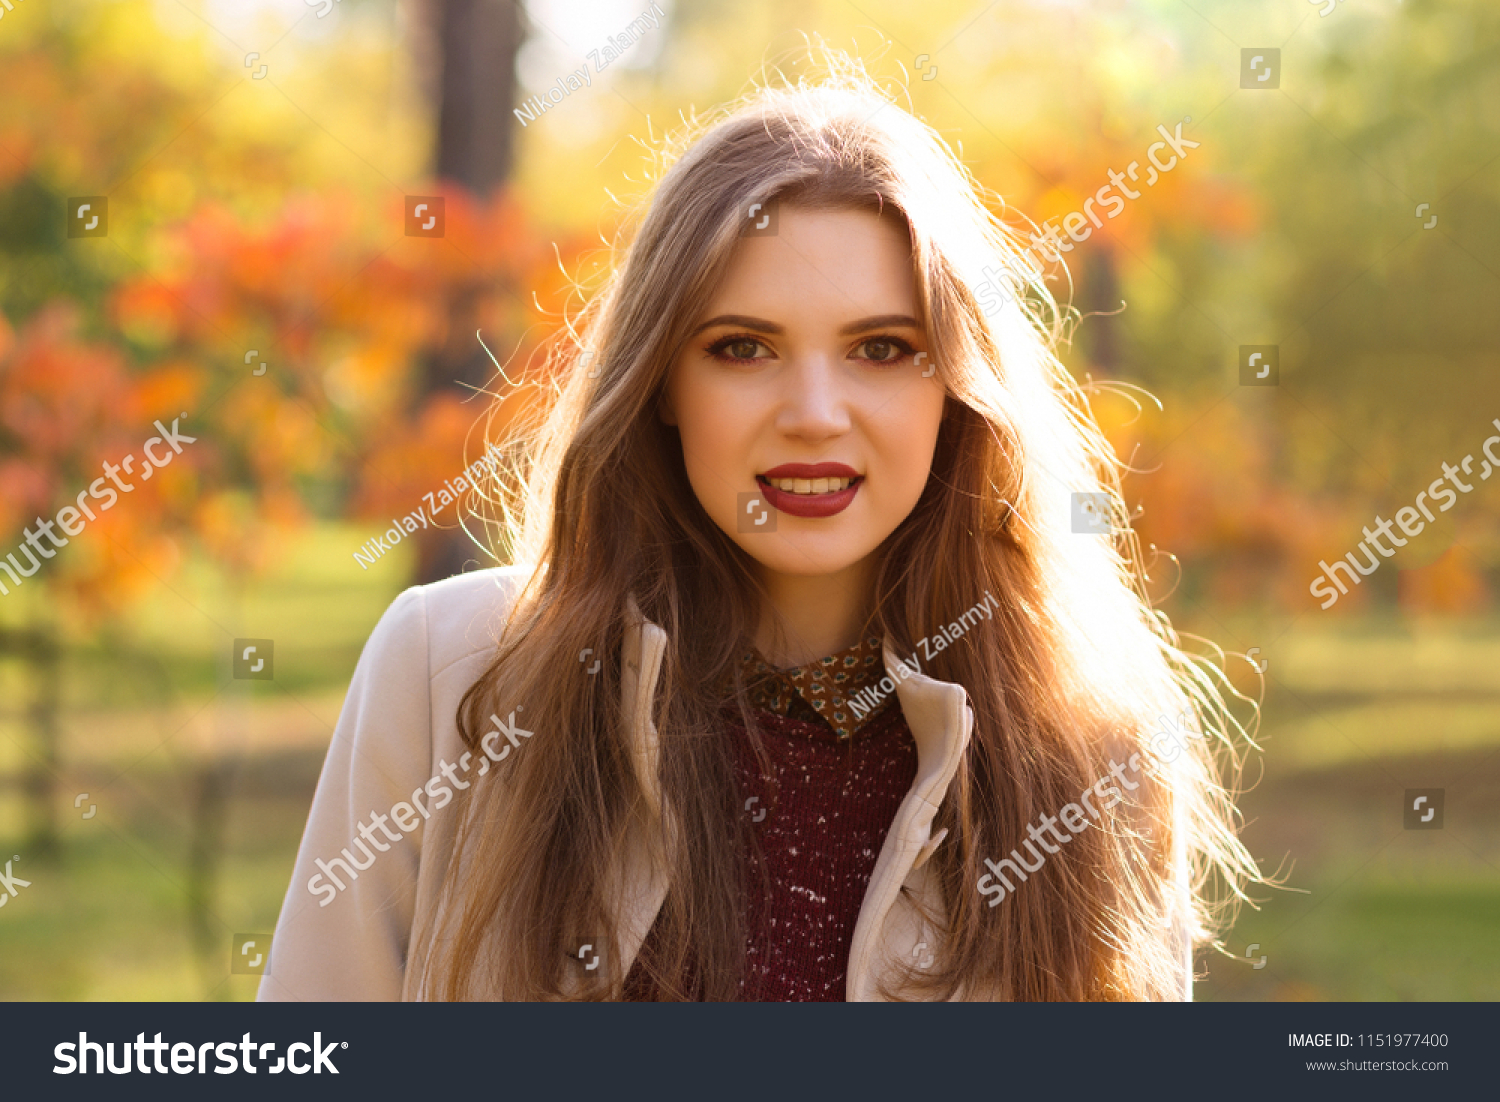 Portrait of smiling woman in autumn park #1151977400